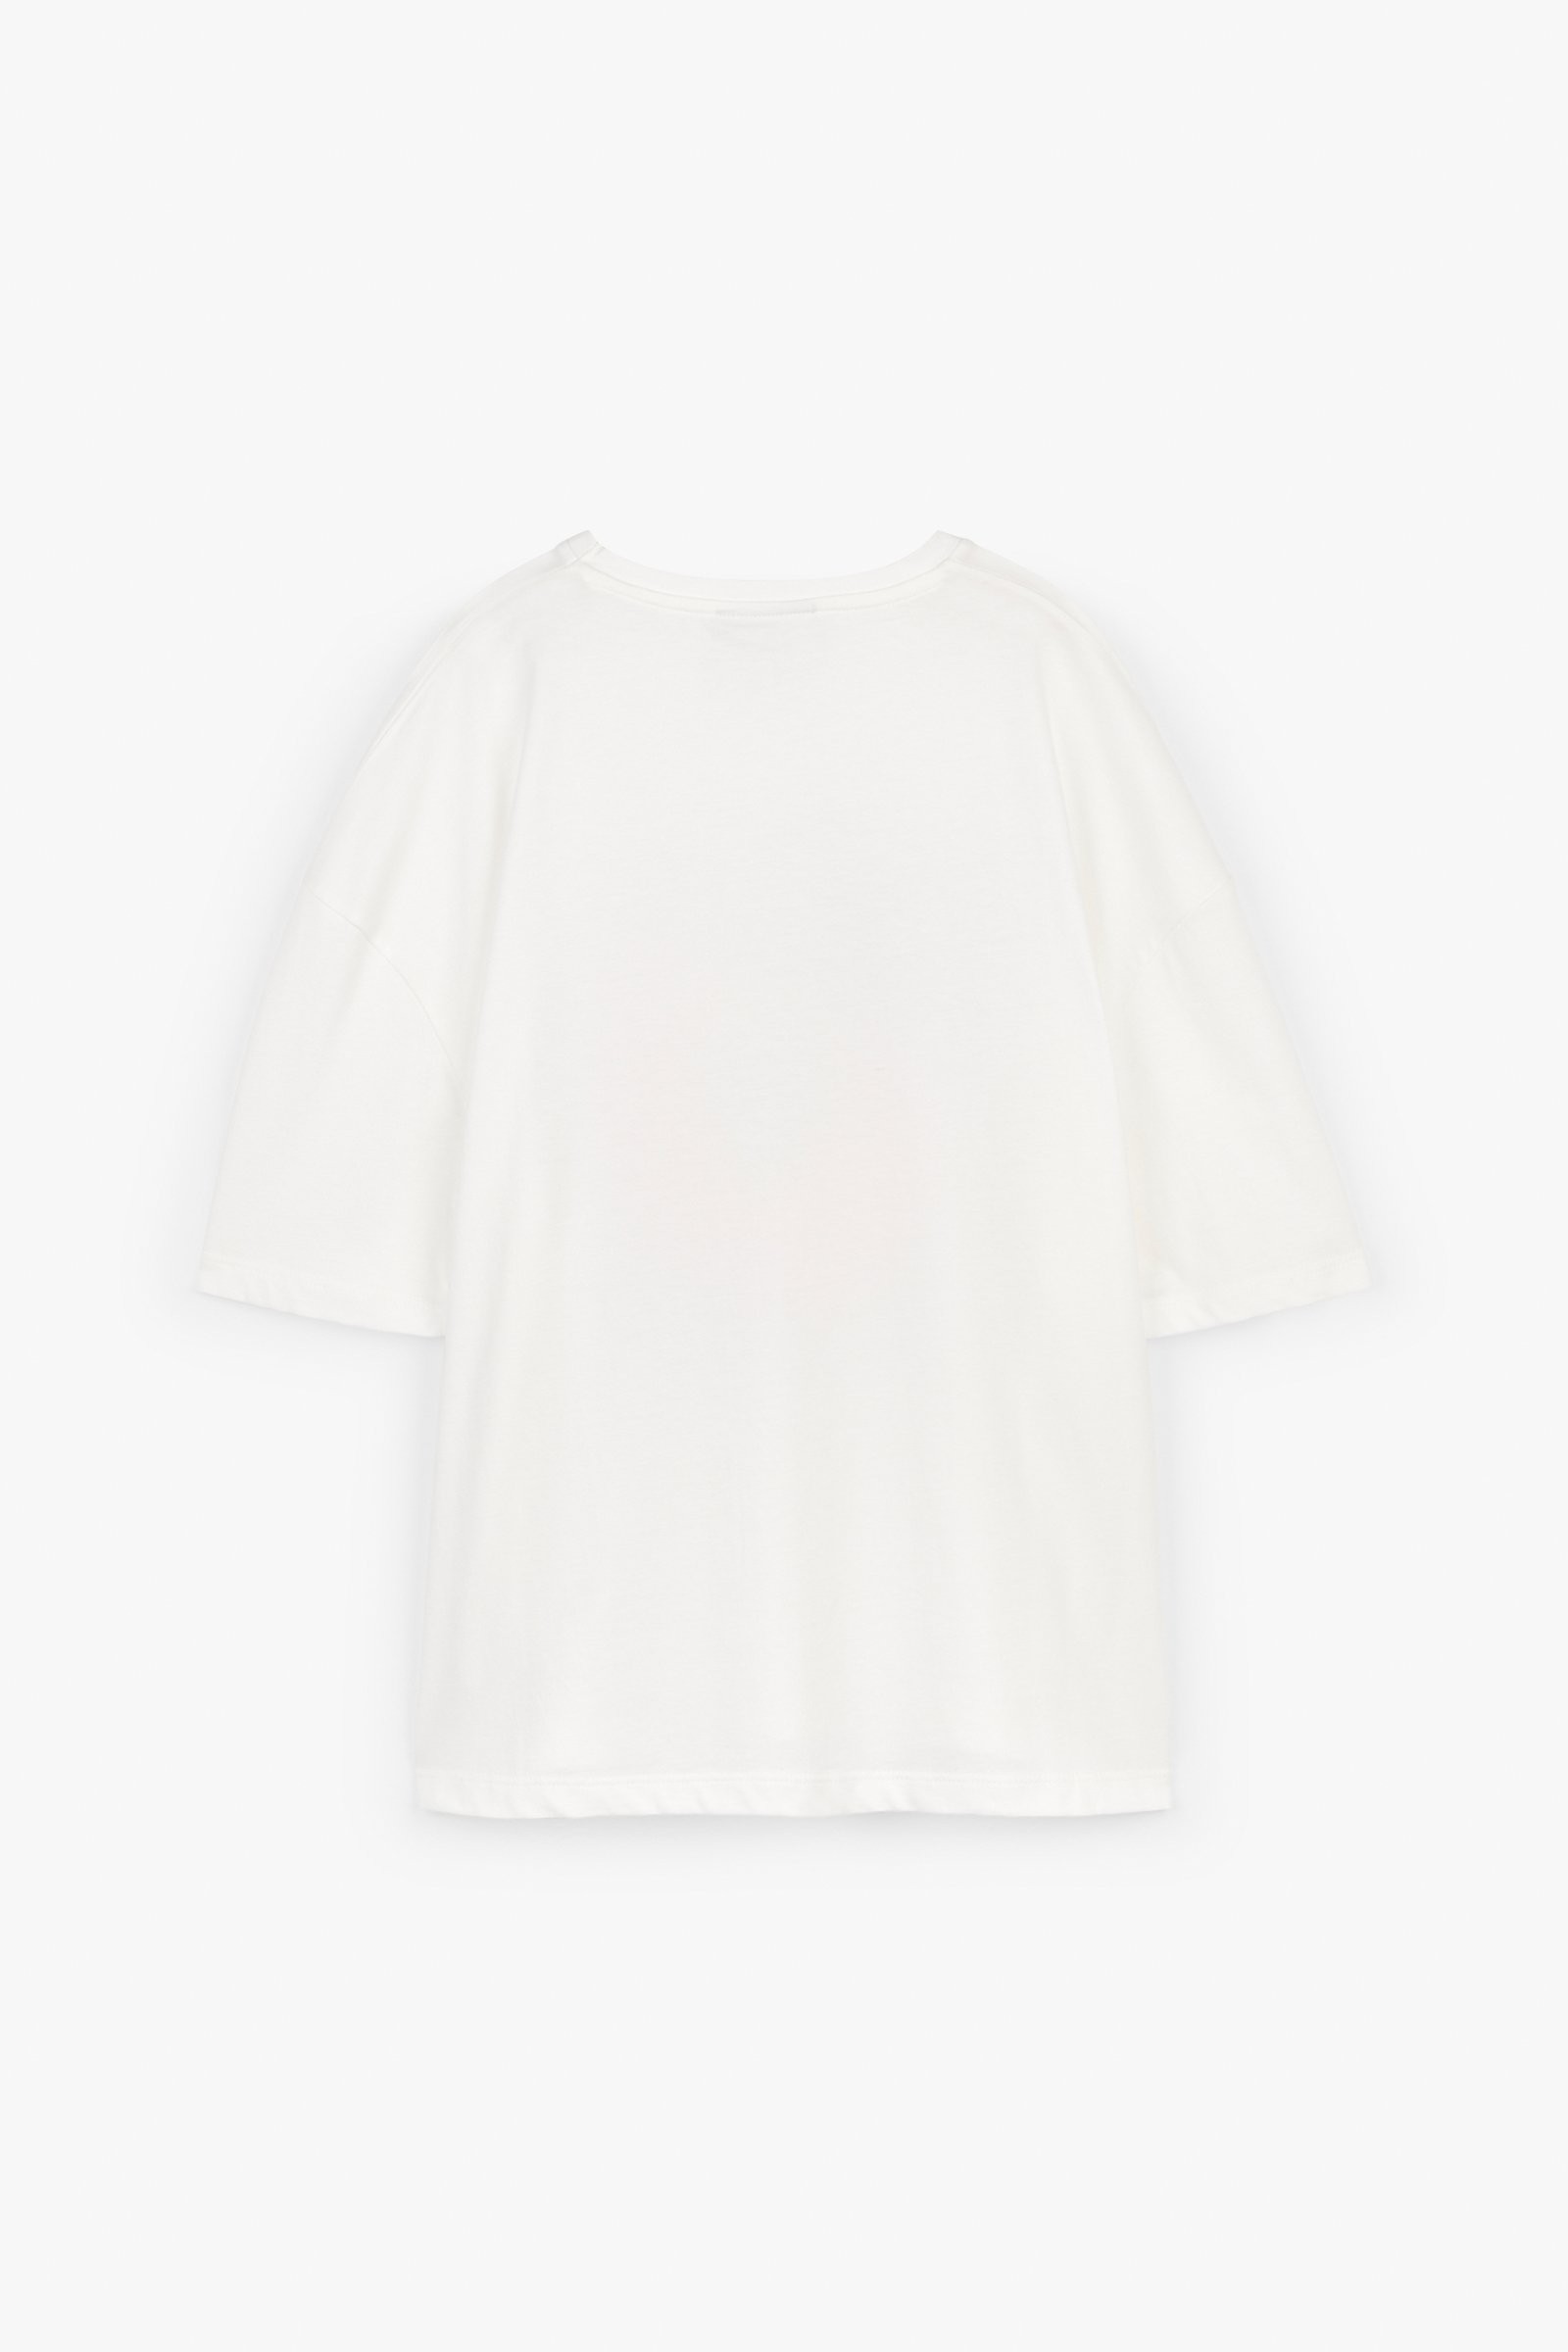 CKS Dames - SELDAS - T-Shirt Kurzarm - Weiß